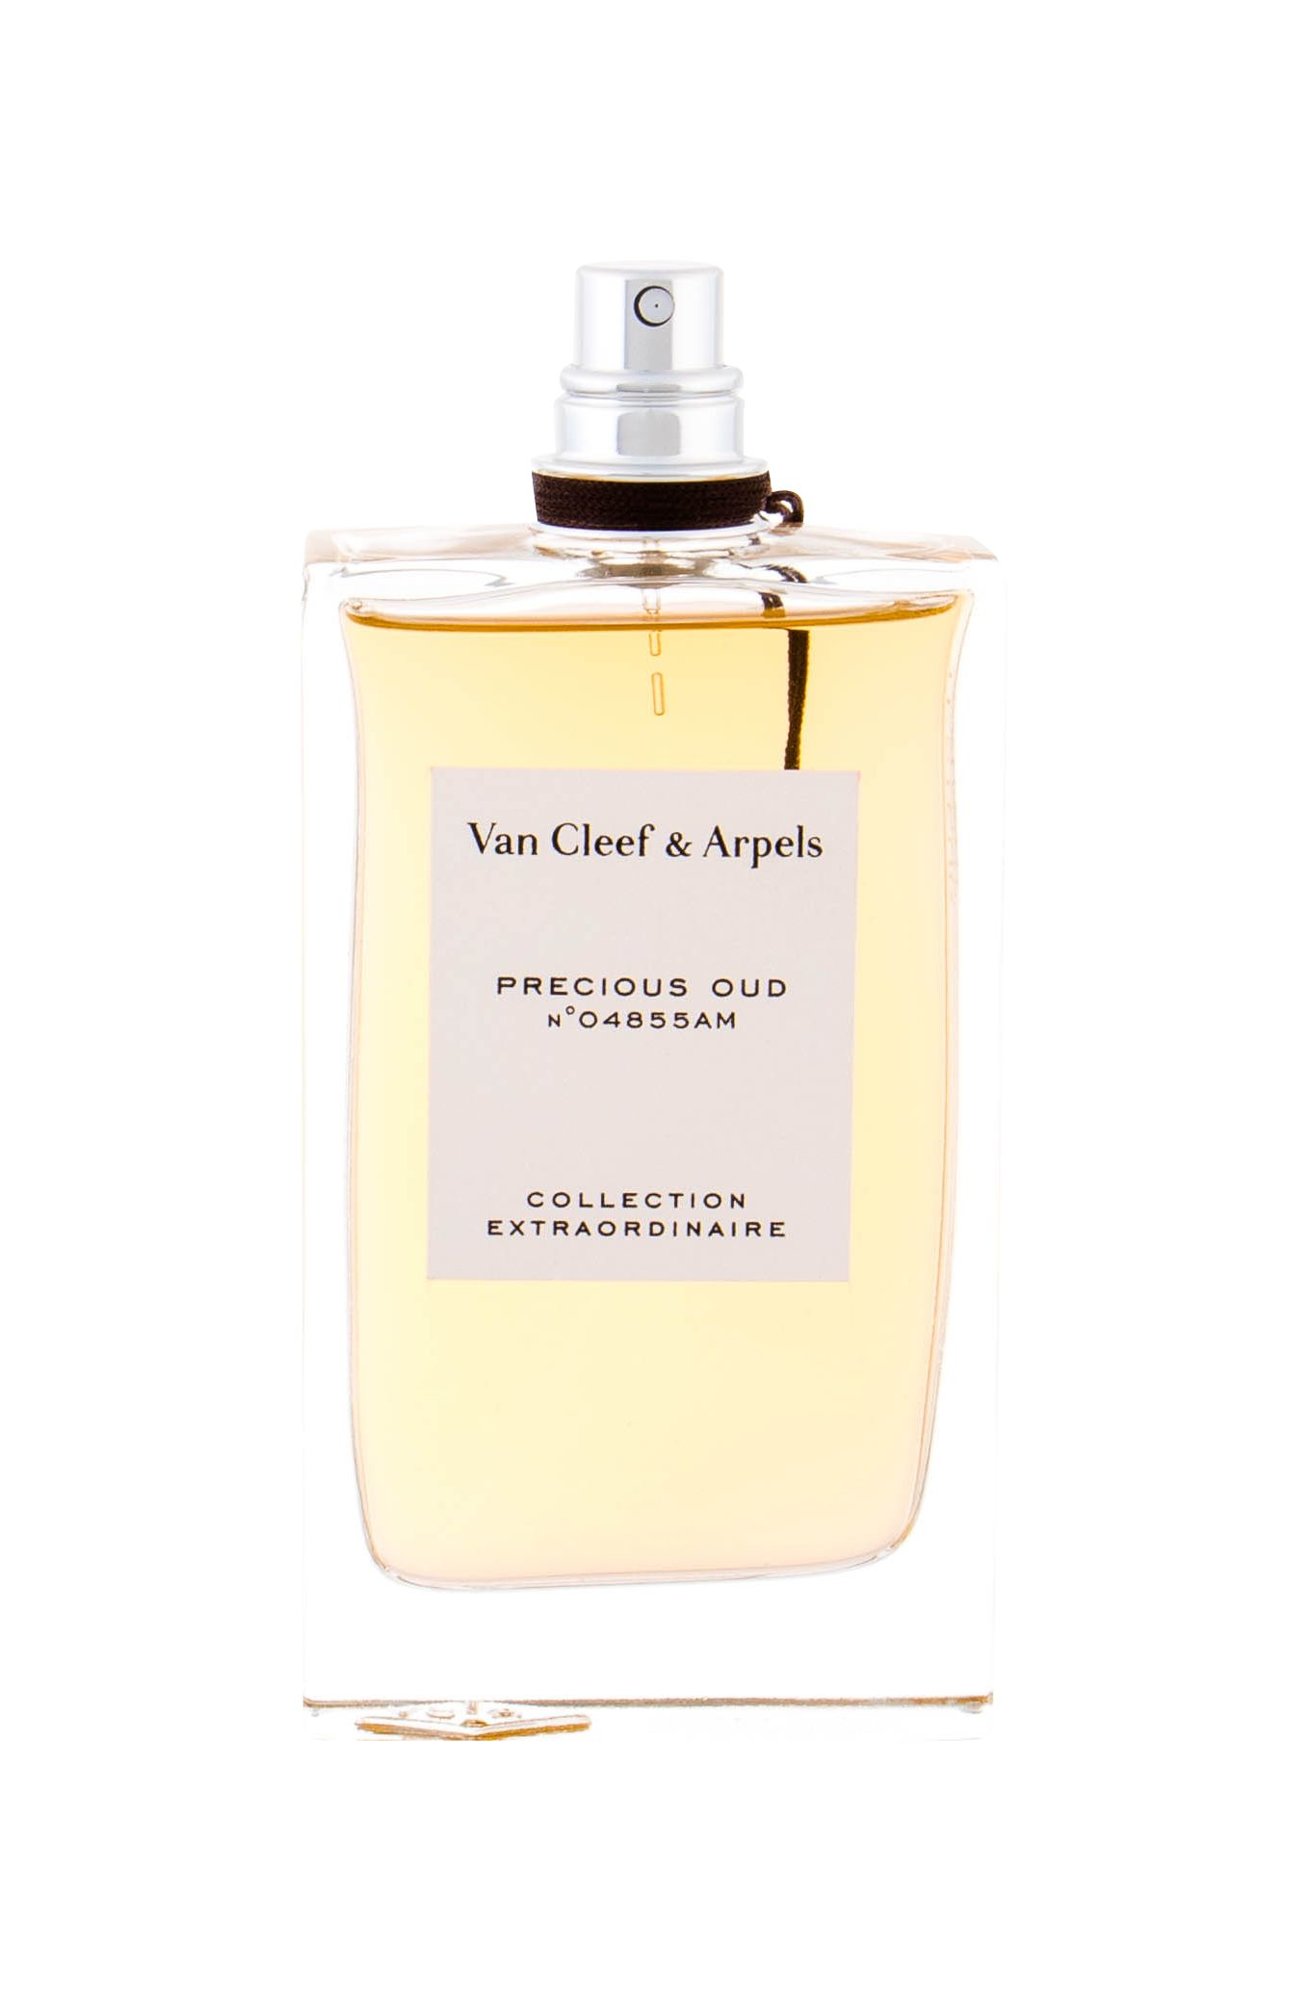 Van Cleef & Arpels Collection Extraordinaire Precious Oud, edp 75ml - Teszter